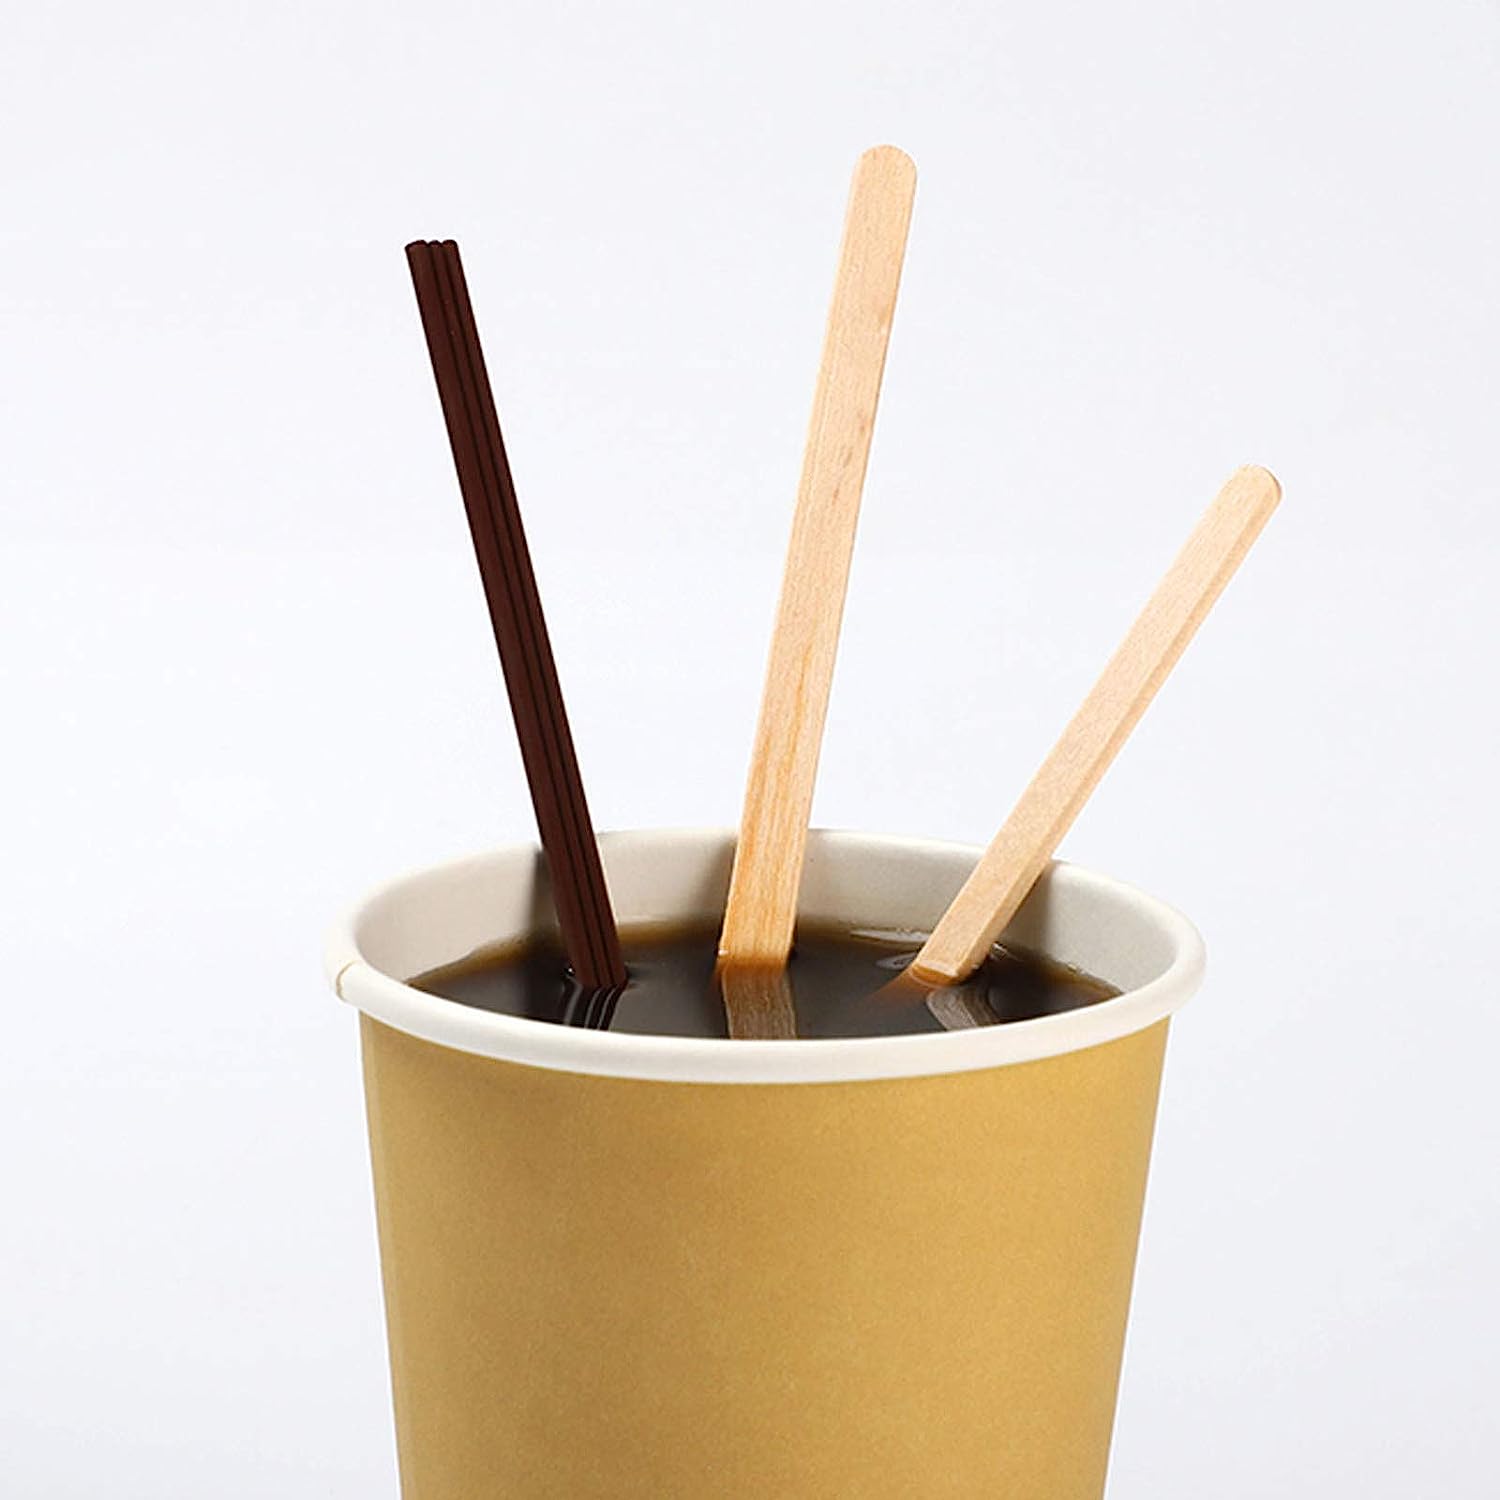 Wholesale Distributor for Coffee Stir Sticks - Texas Specialty